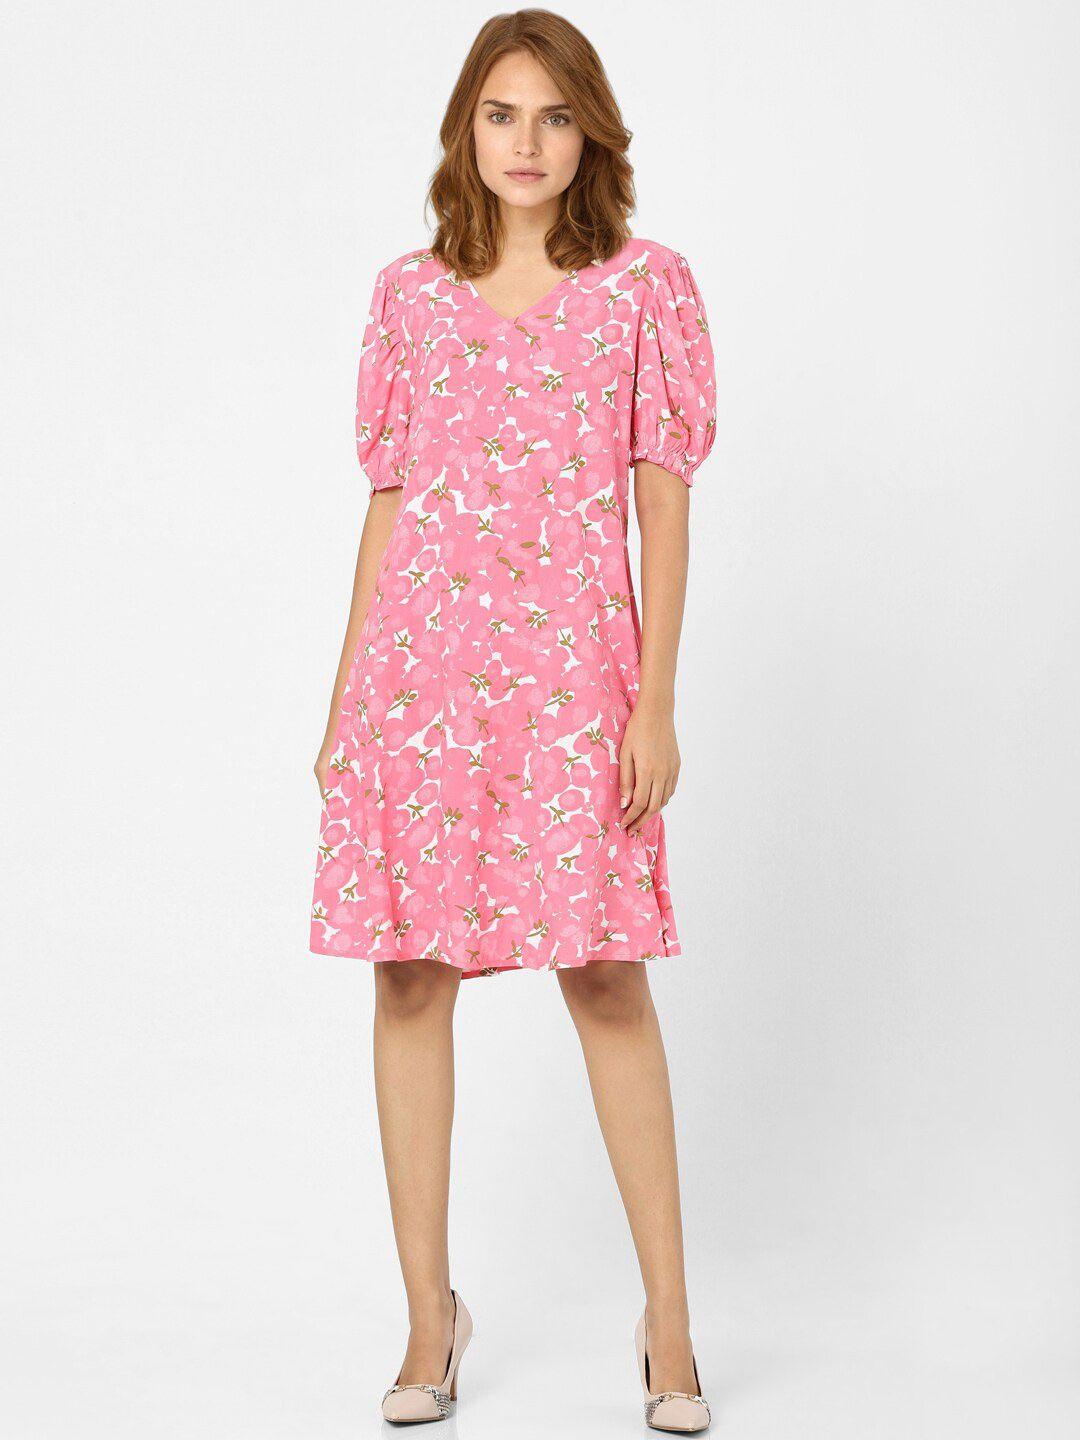 vero moda pink floral dress